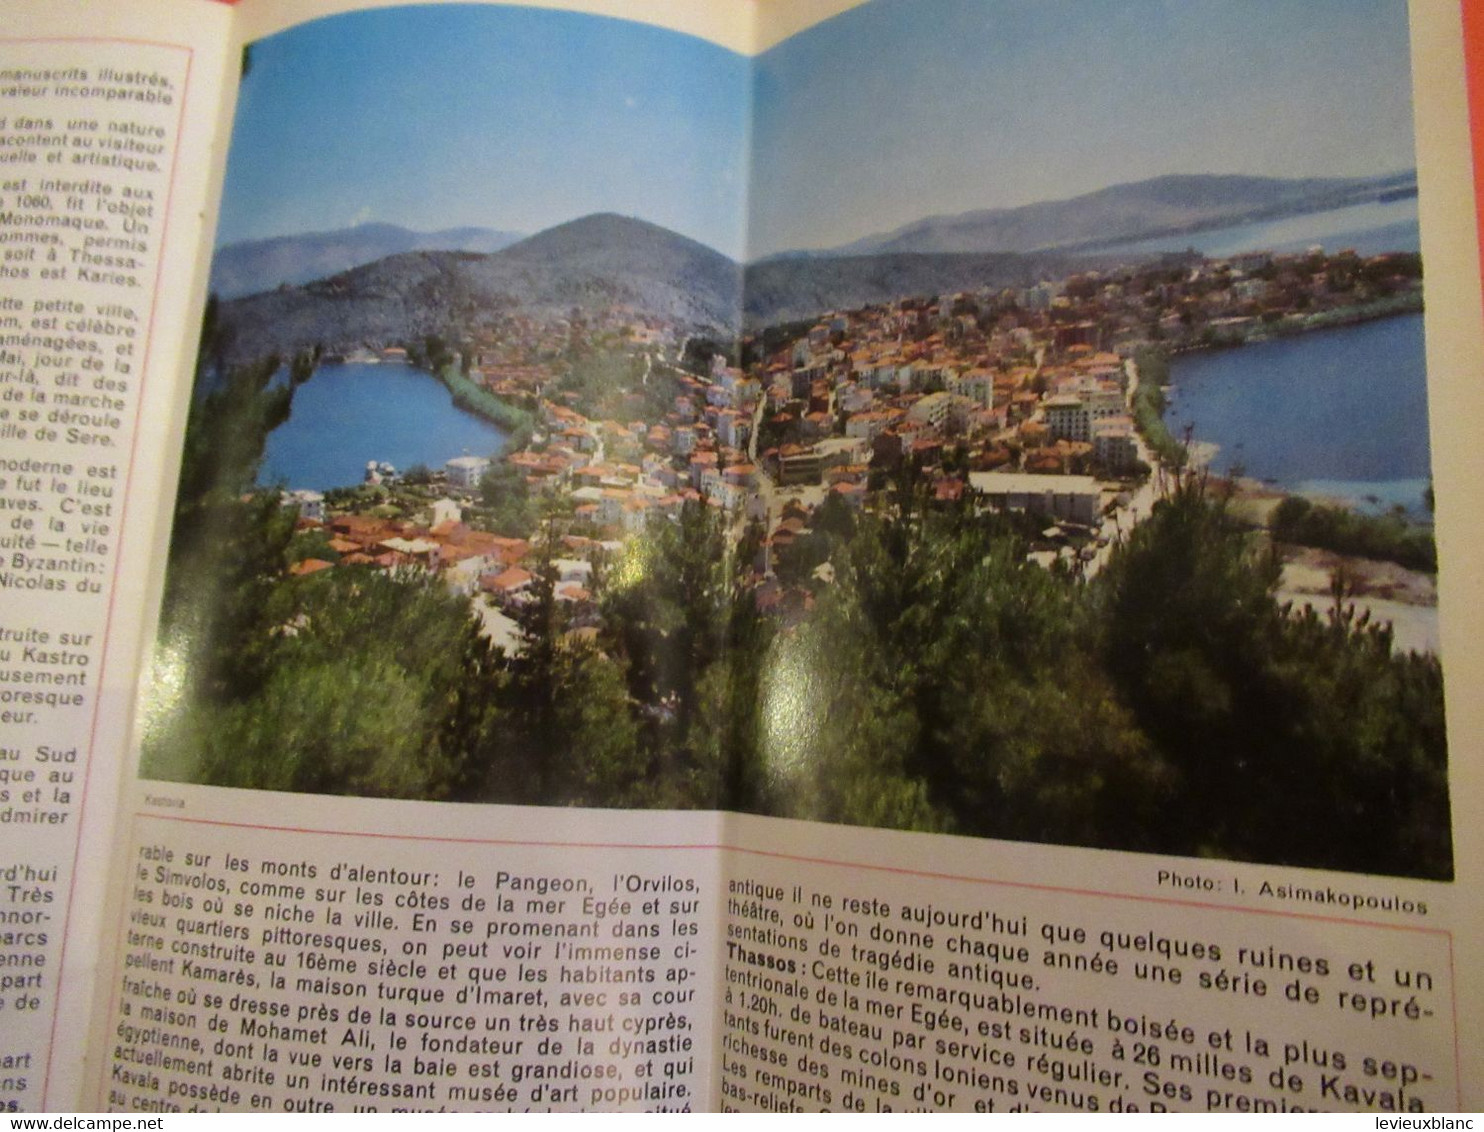 GRECE/ Grece du Nord -Macédoine -Trace / Thessaloniki/ Illustré, avec liste des hotels / 1969              PGC474